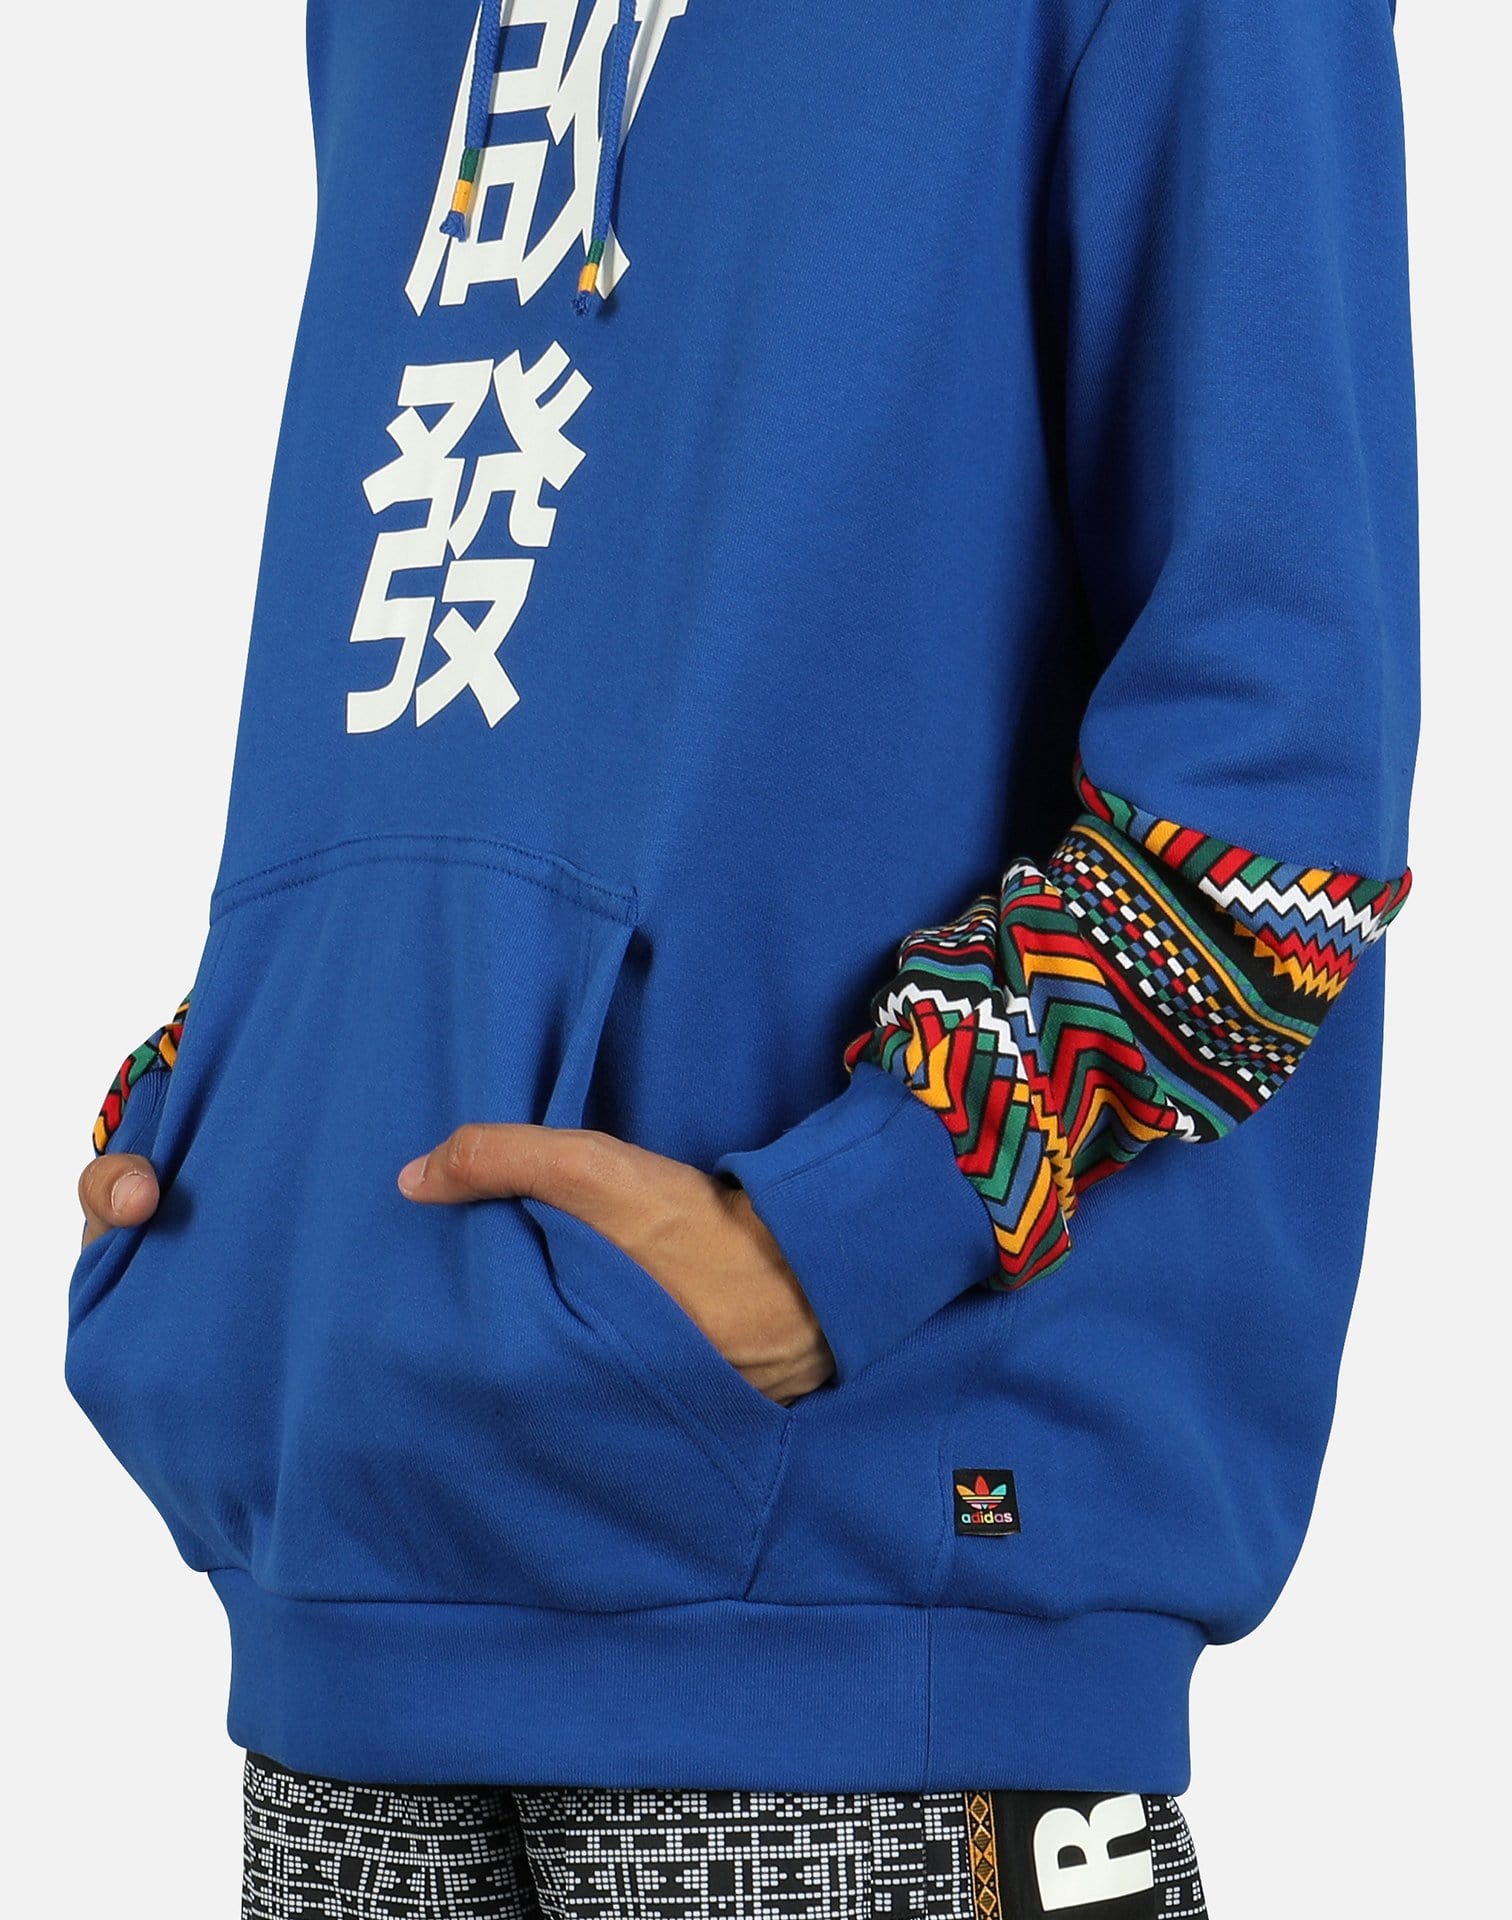 Adidas by Pharrell Williams Solar HU Blue Hoodie Sz Medium SOLD OUT Limited